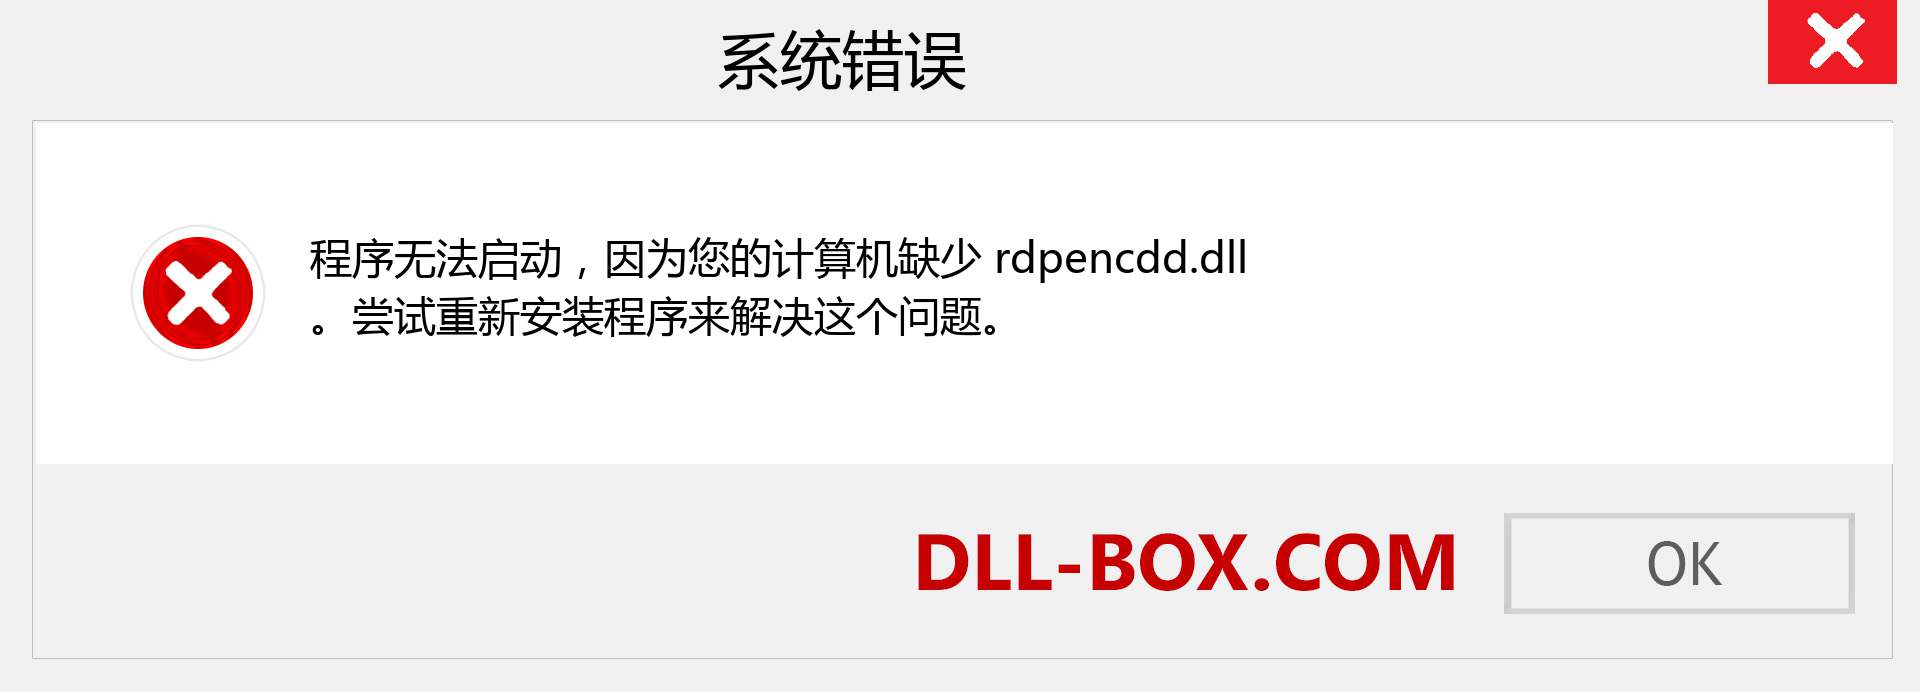 rdpencdd.dll 文件丢失？。 适用于 Windows 7、8、10 的下载 - 修复 Windows、照片、图像上的 rdpencdd dll 丢失错误